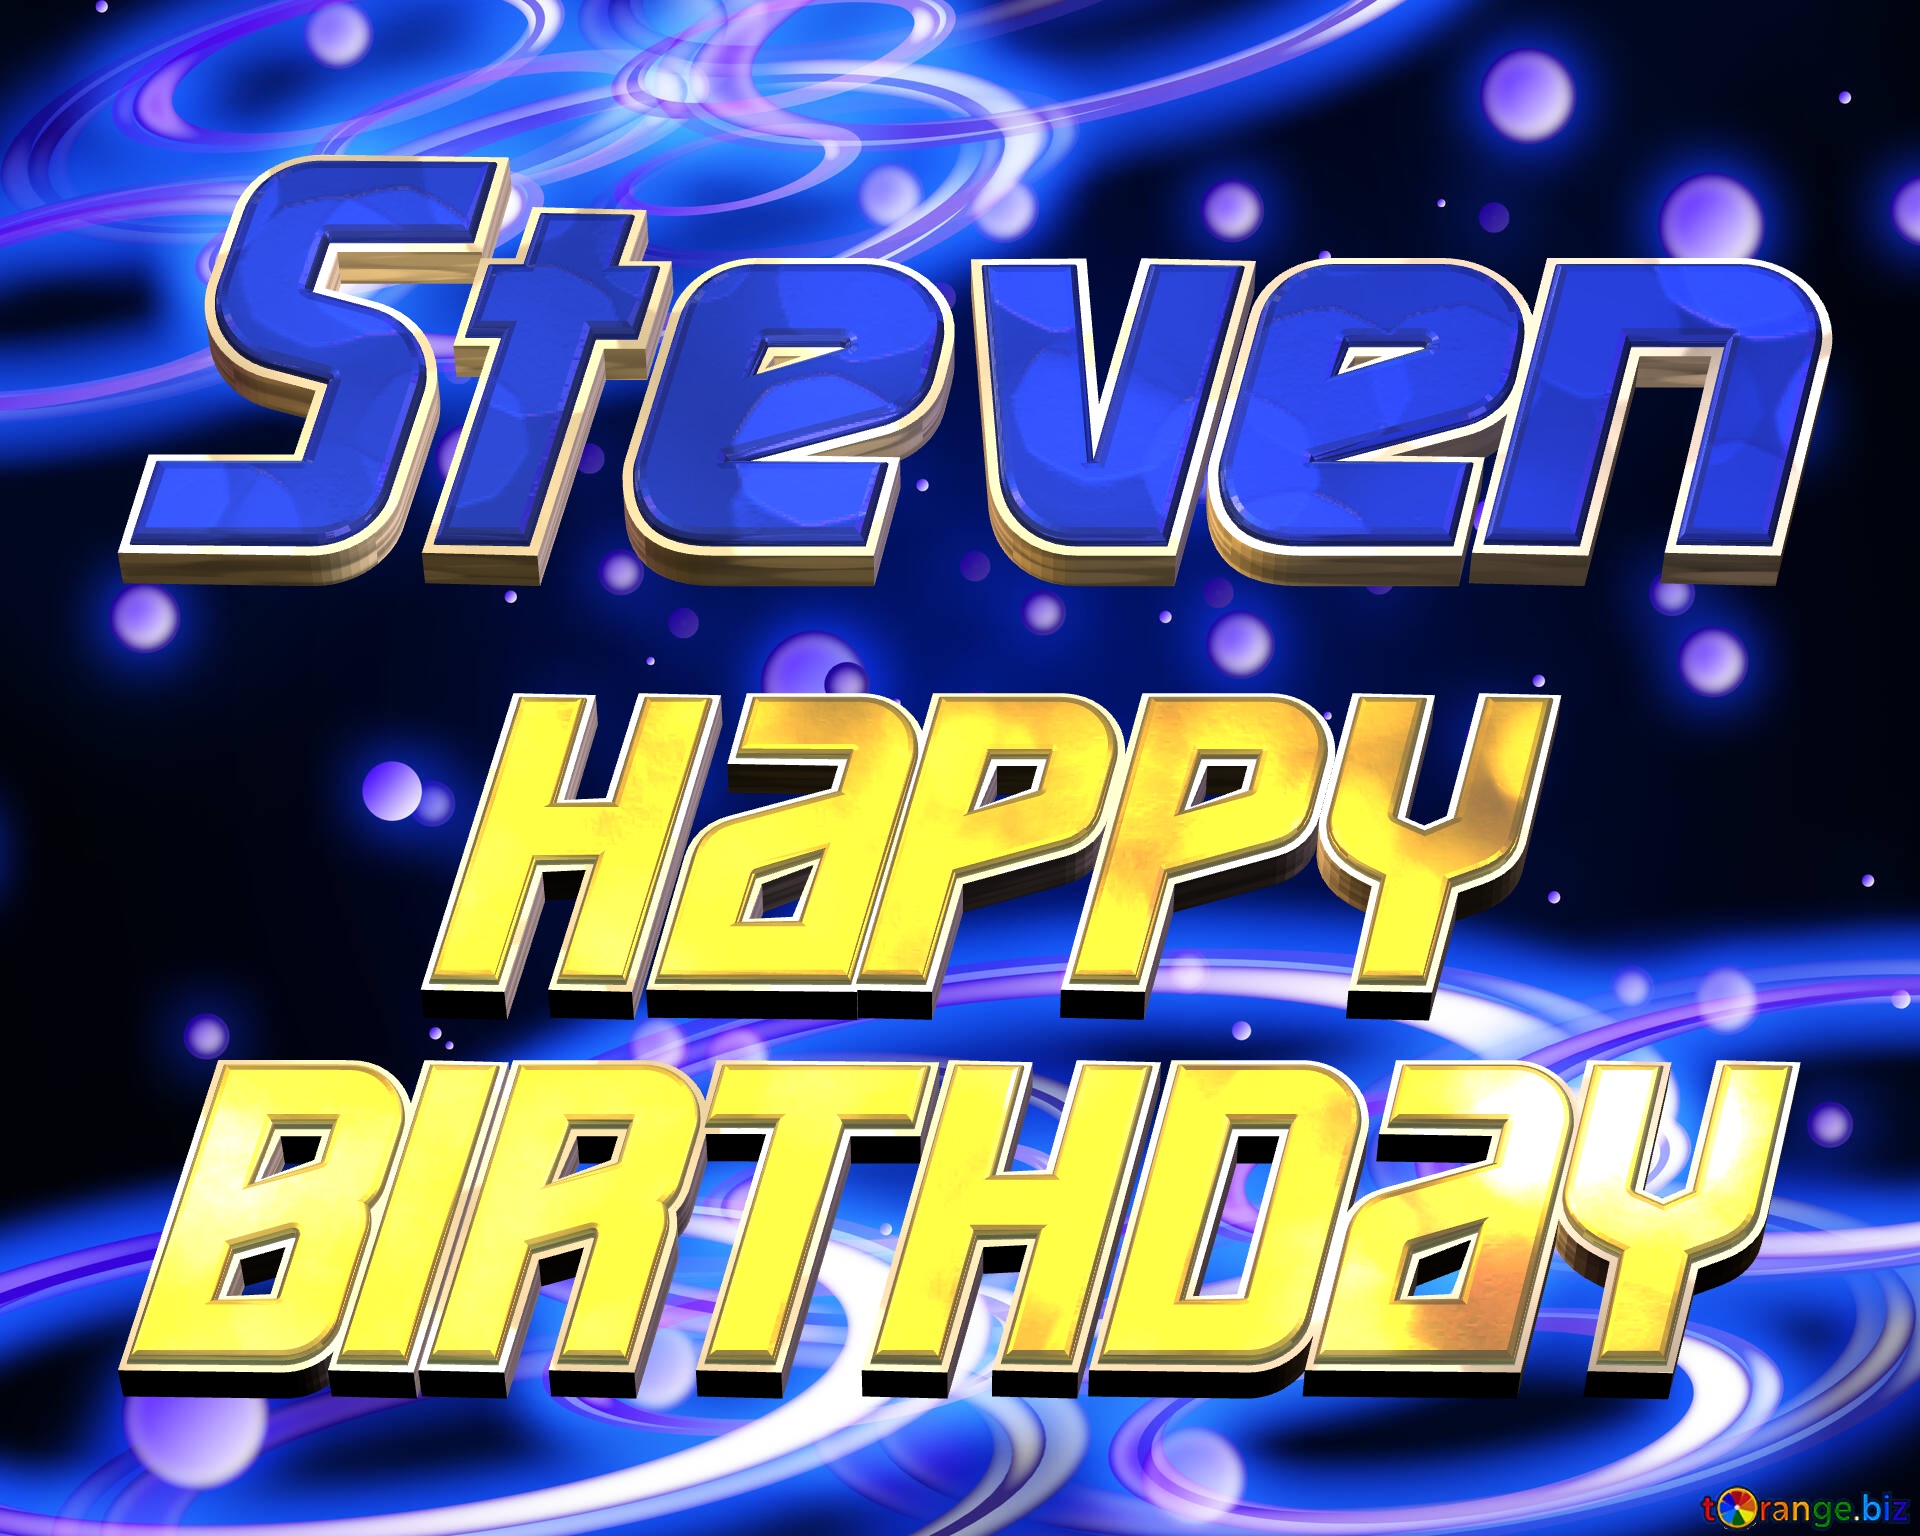 Steven Space Happy Birthday! Technology background №54919